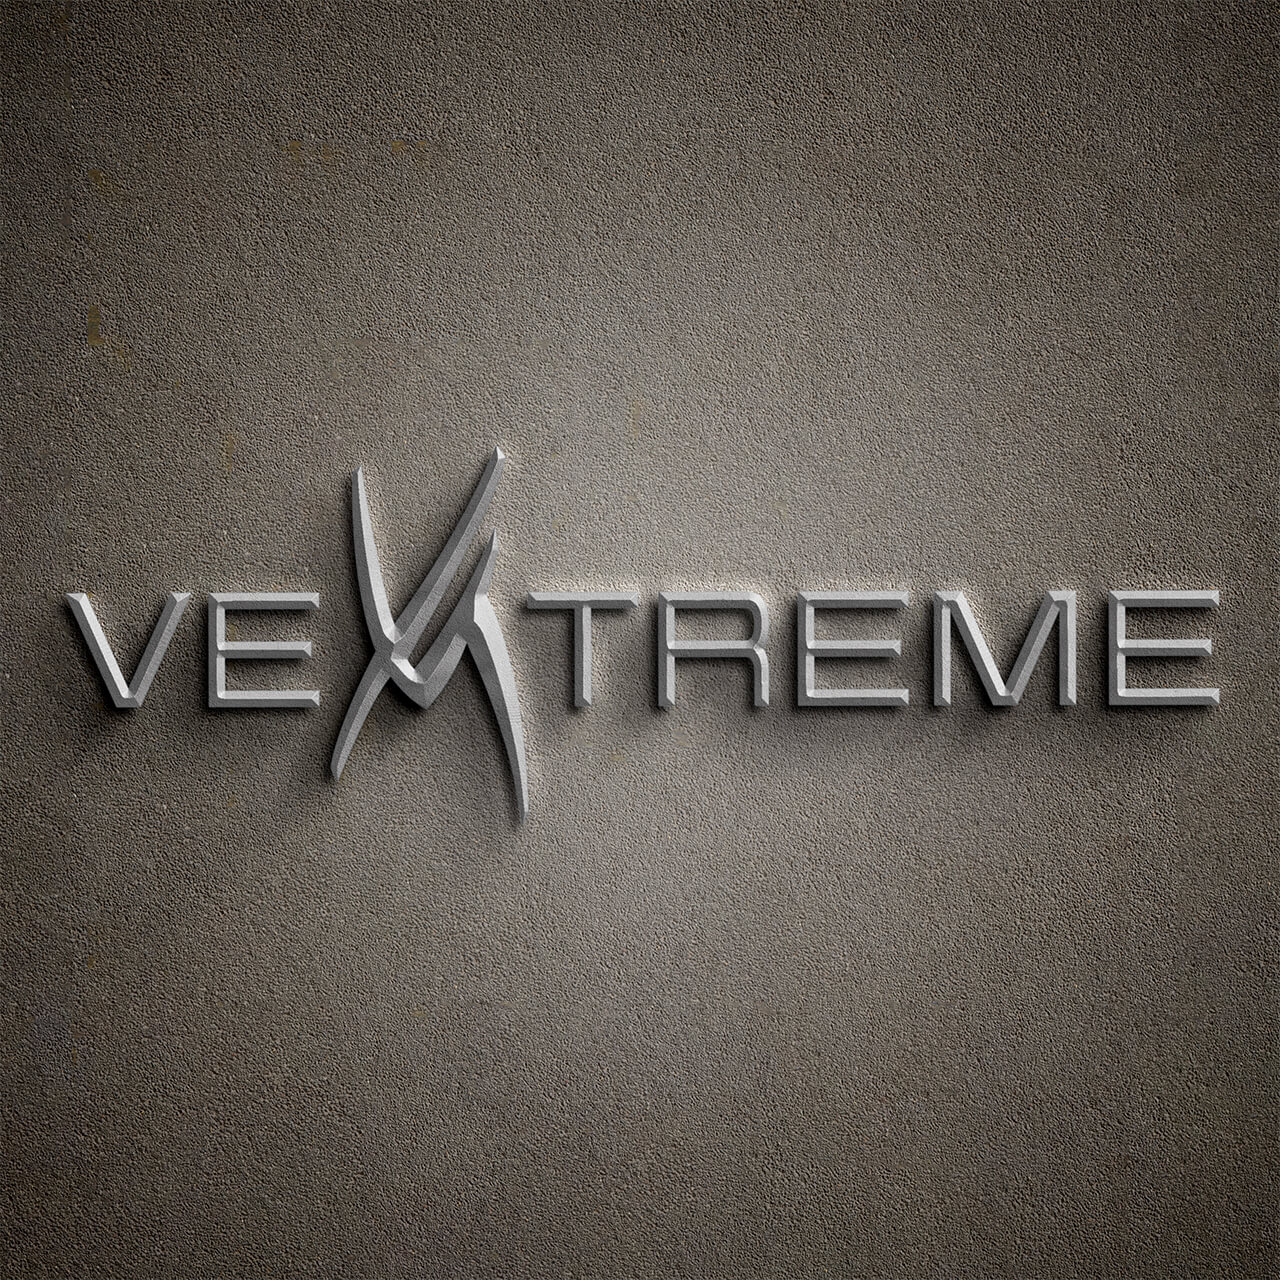 Vextreme | Branding